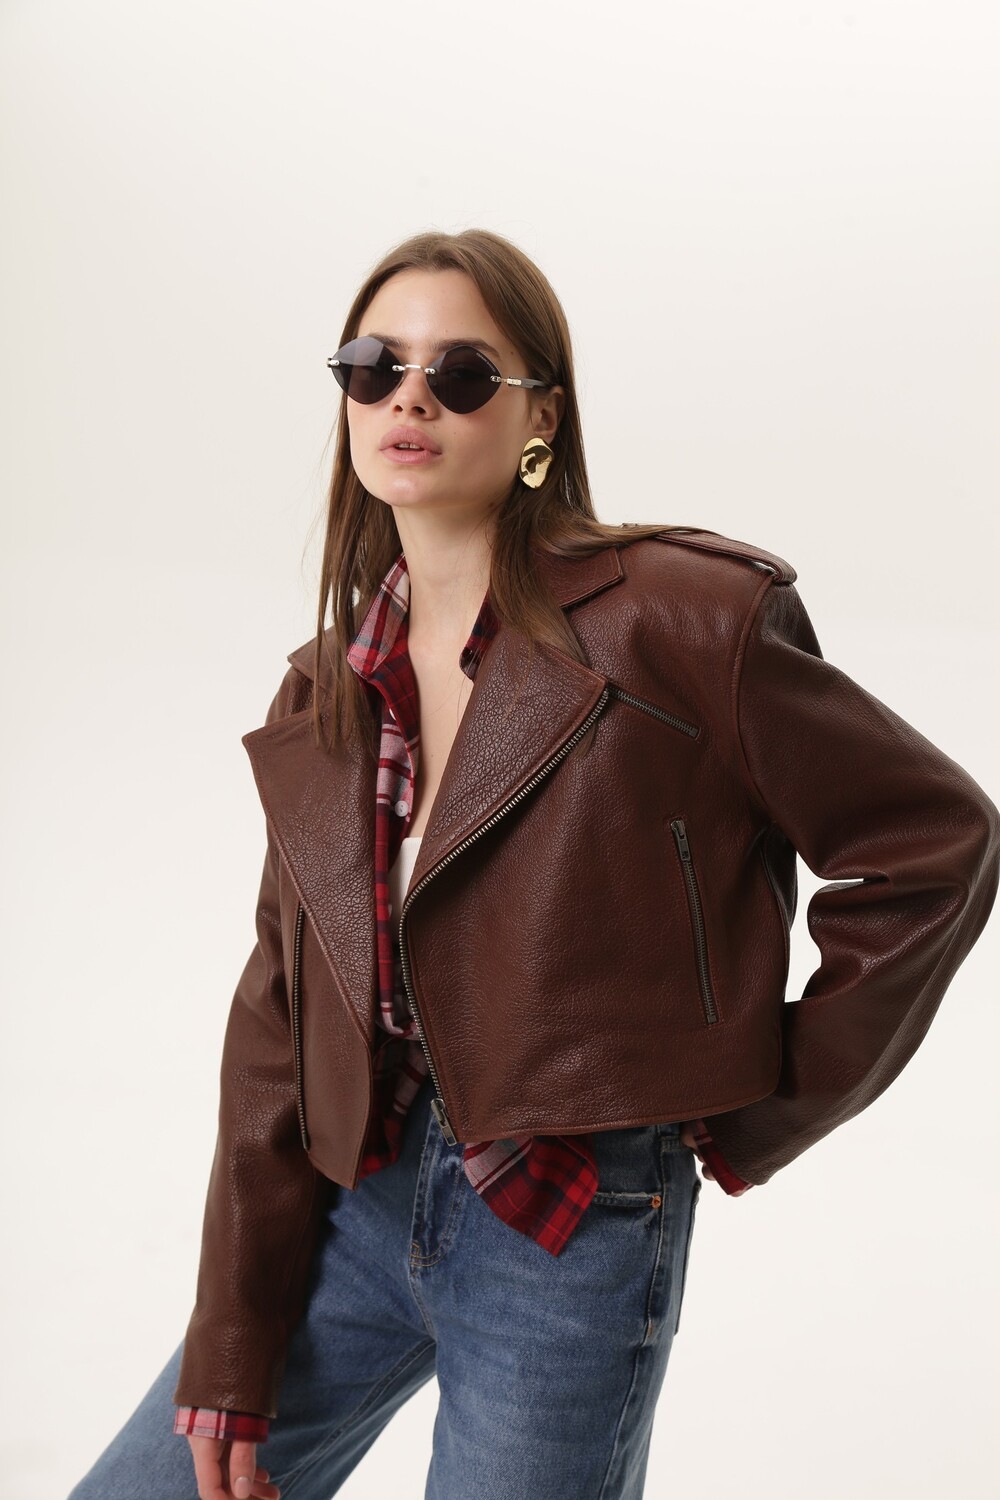 Biker jacket made of genuine leather, brown